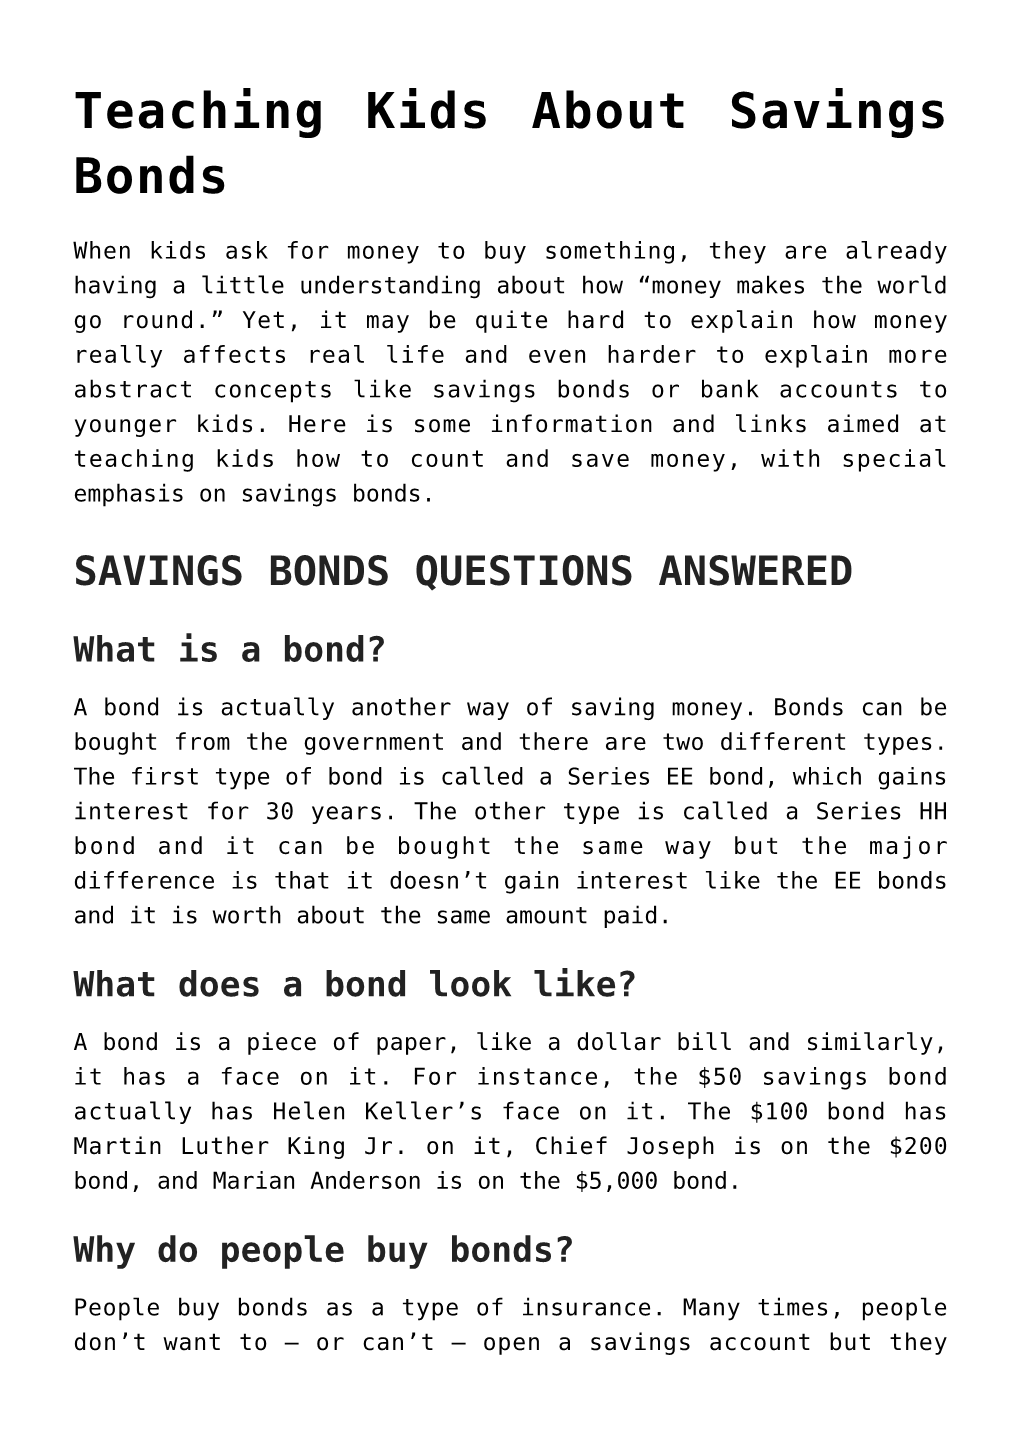 Teaching Kids About Savings Bonds